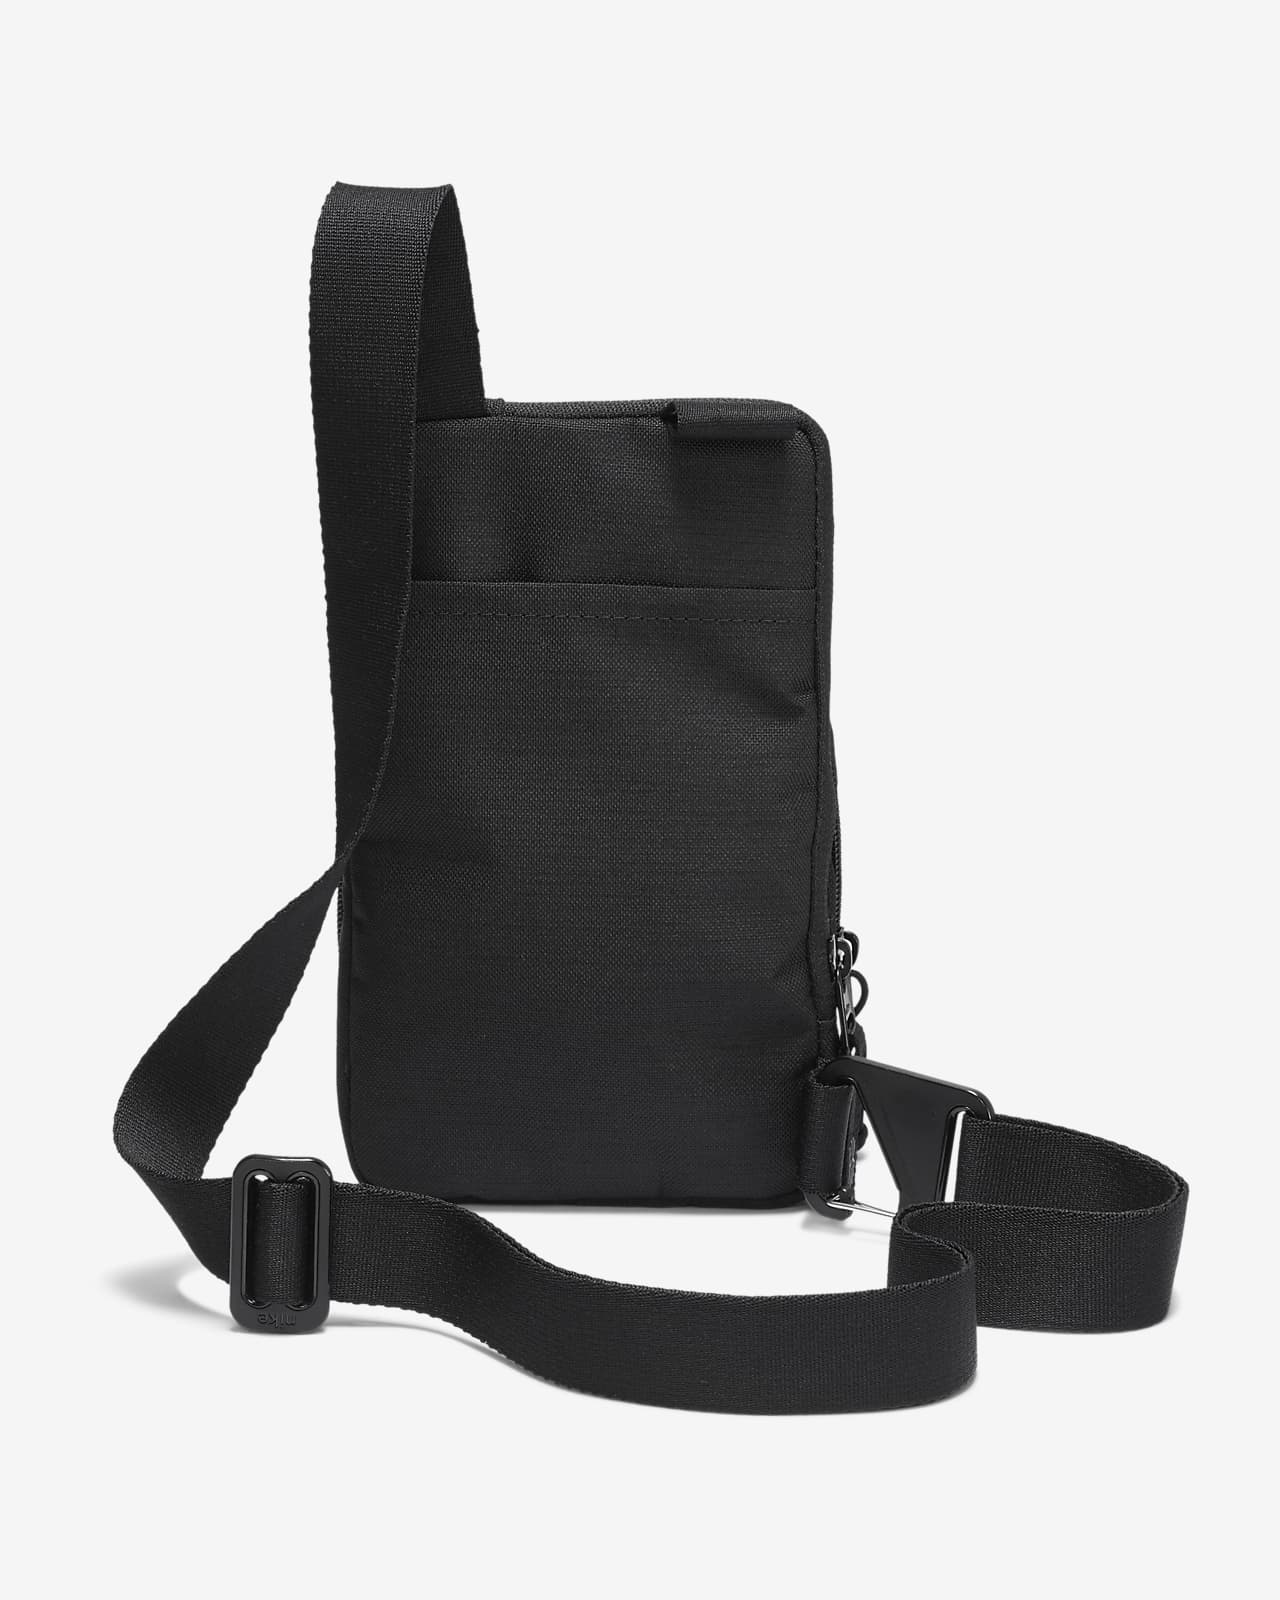 new nike sling bag